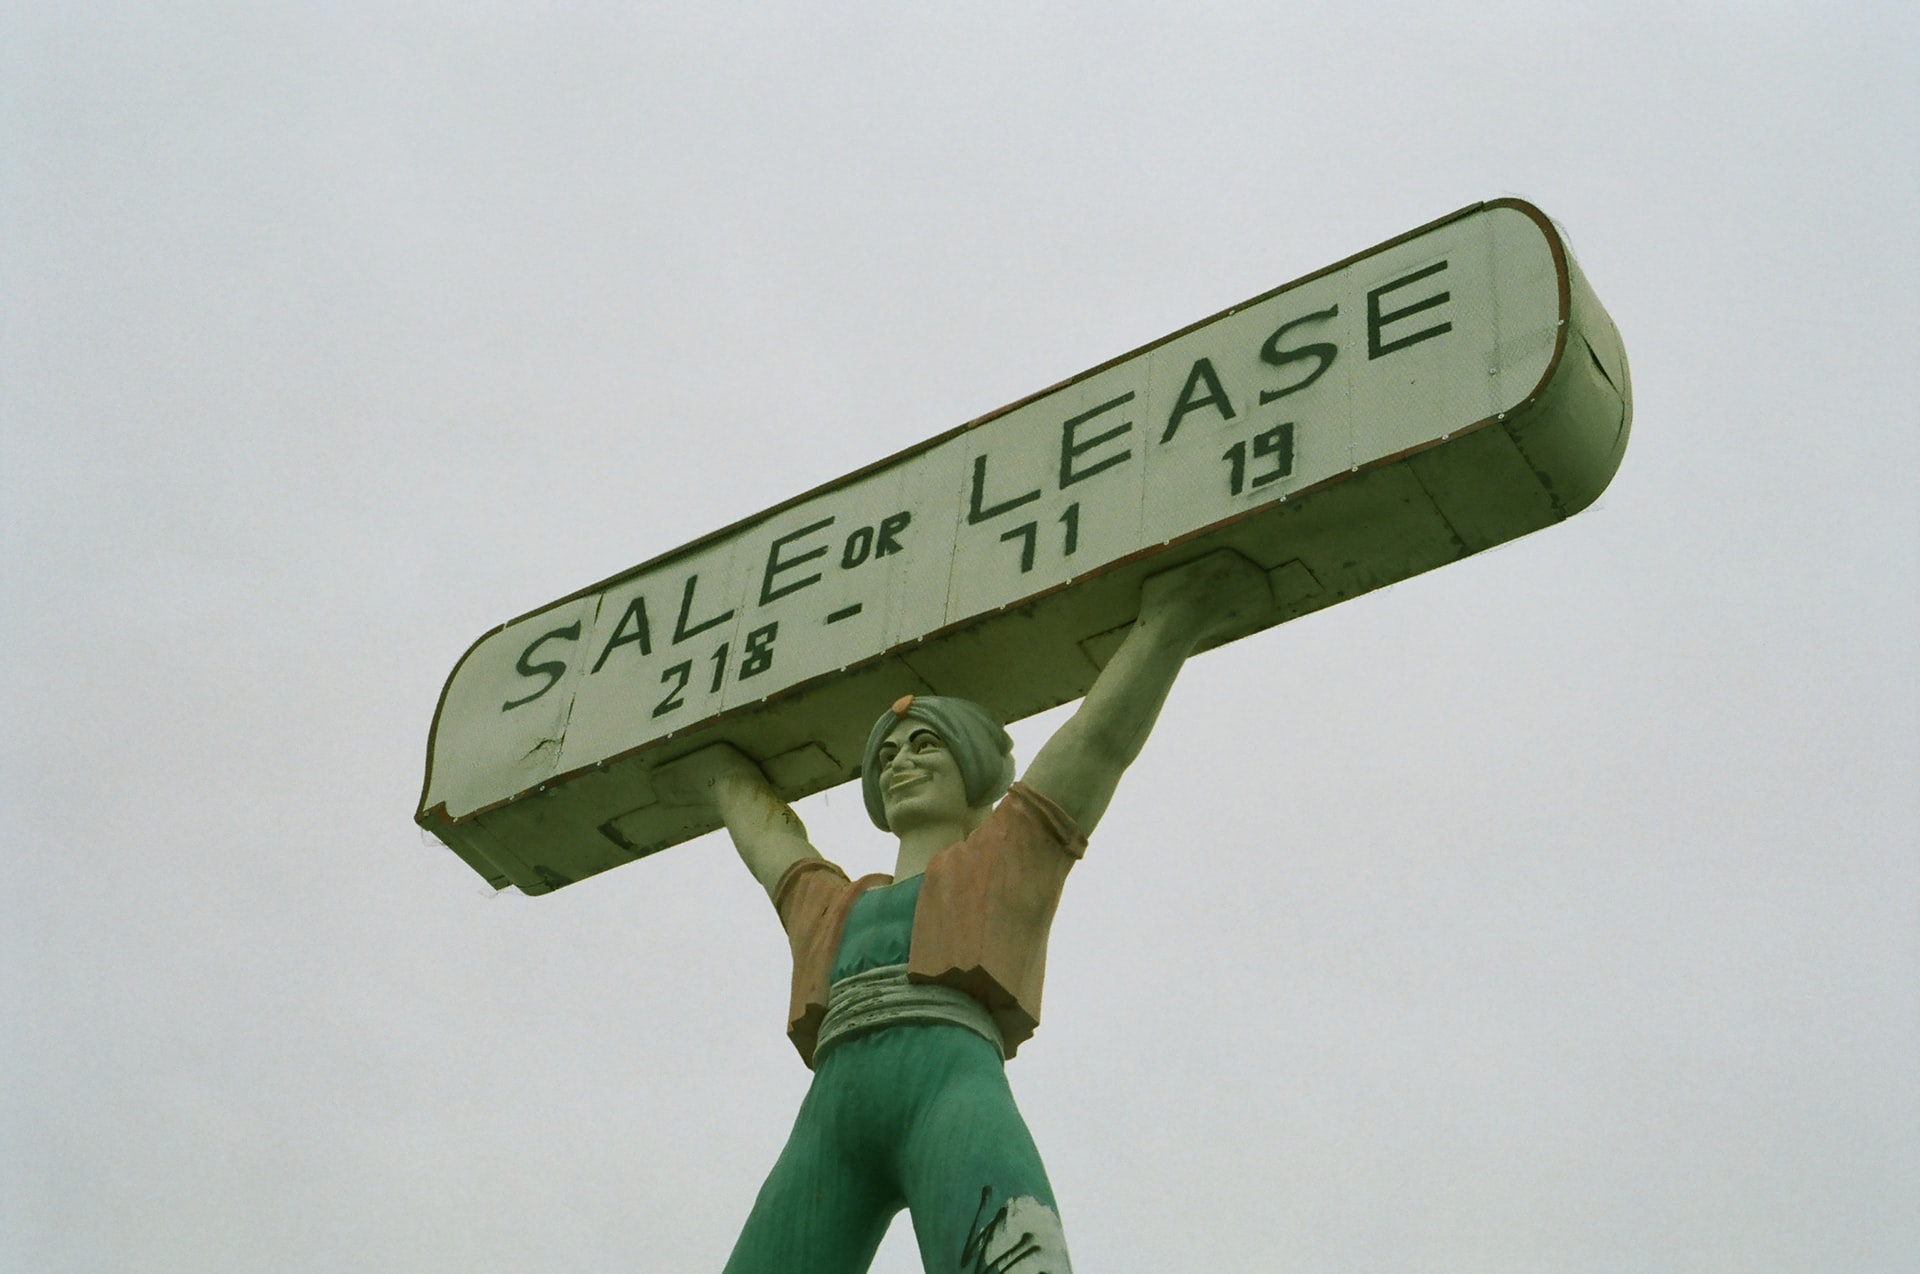 Vintage sale or lease sign in Minnesota